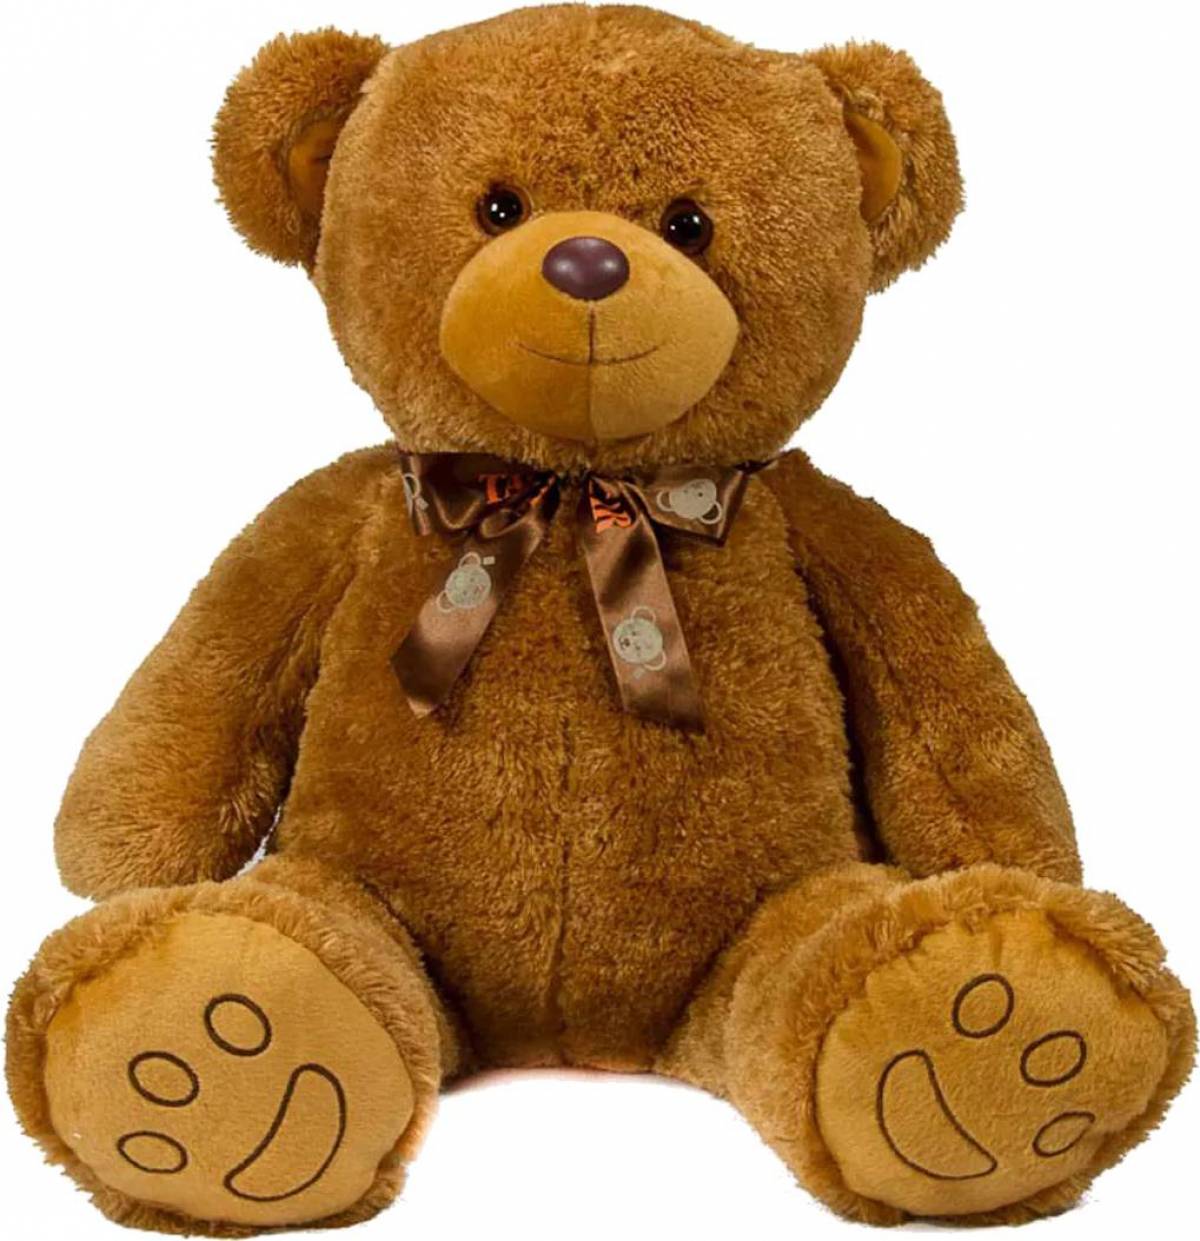 Toys медведь. Тедди Беар. Мишки Тедди Беар. Тедди Беар игрушка. Плюшевый медведь Steiff Teddy Bear.